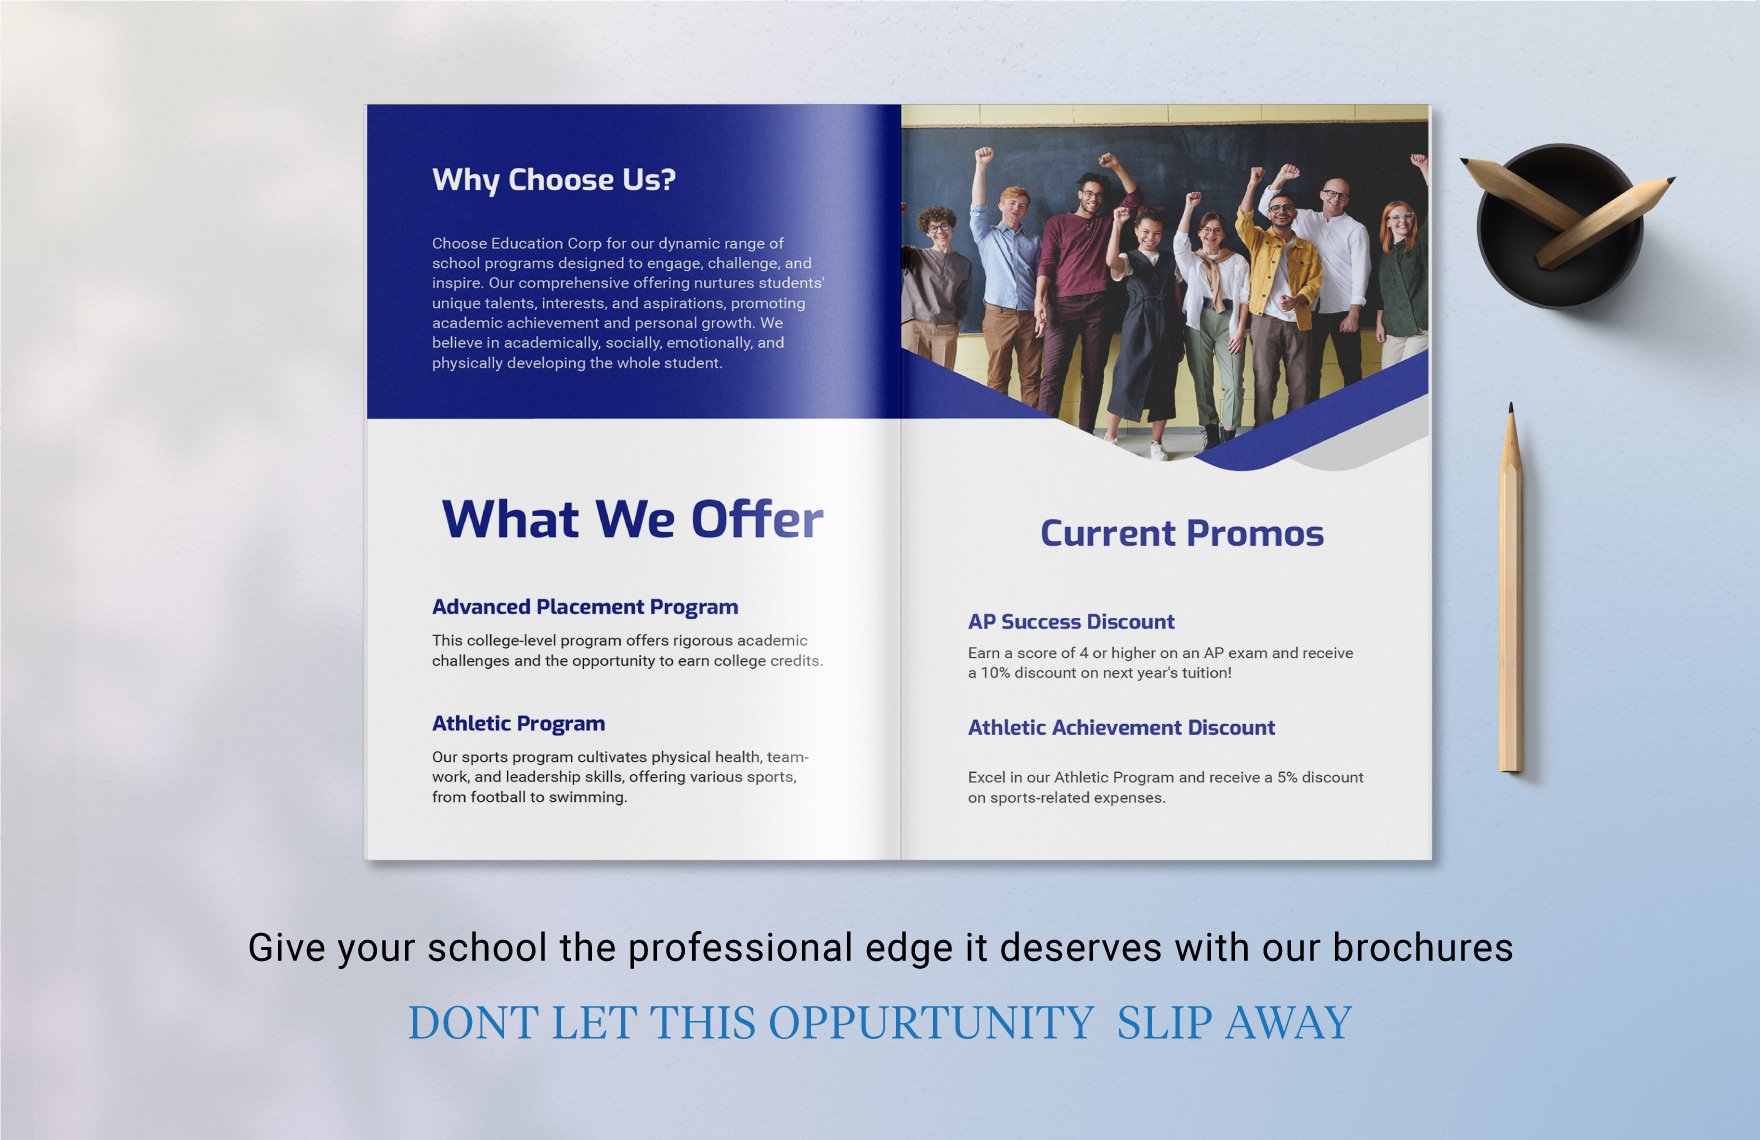 School Program-Specific Brochure Template